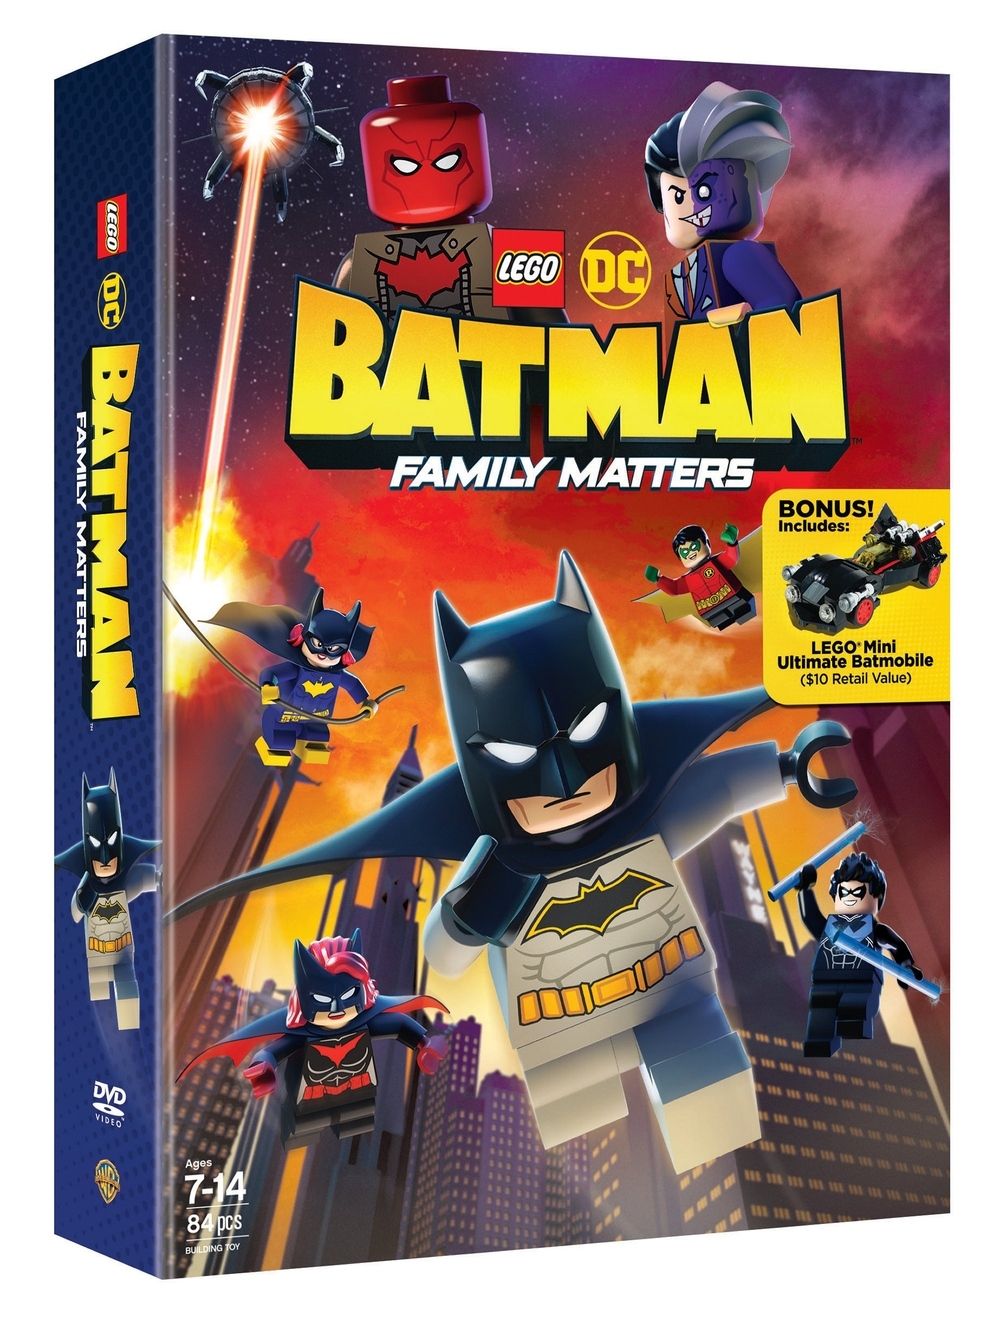 LEGO DC: Batman - Family Matters blu-ray cover art #2